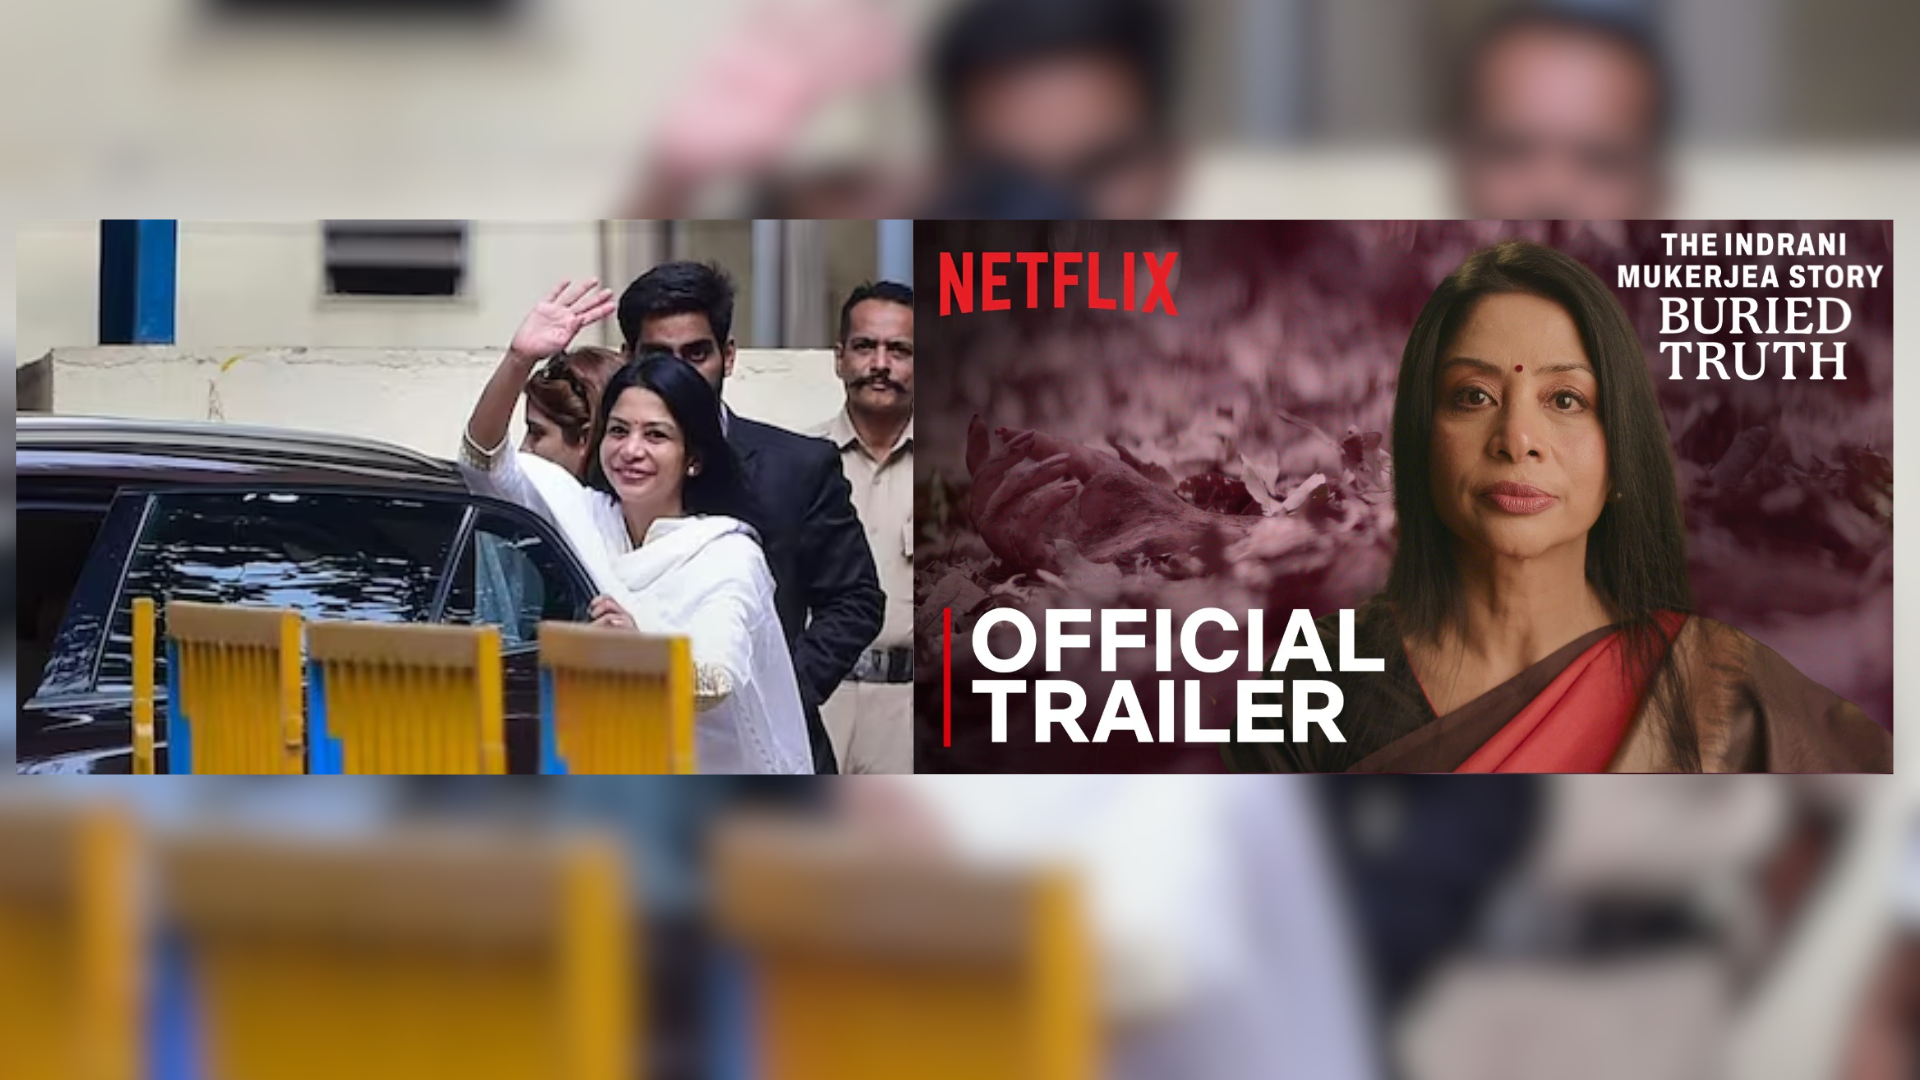 High Court Halts Netflix Documentary on Indrani Mukerjea, Orders Exclusive Screening for CBI